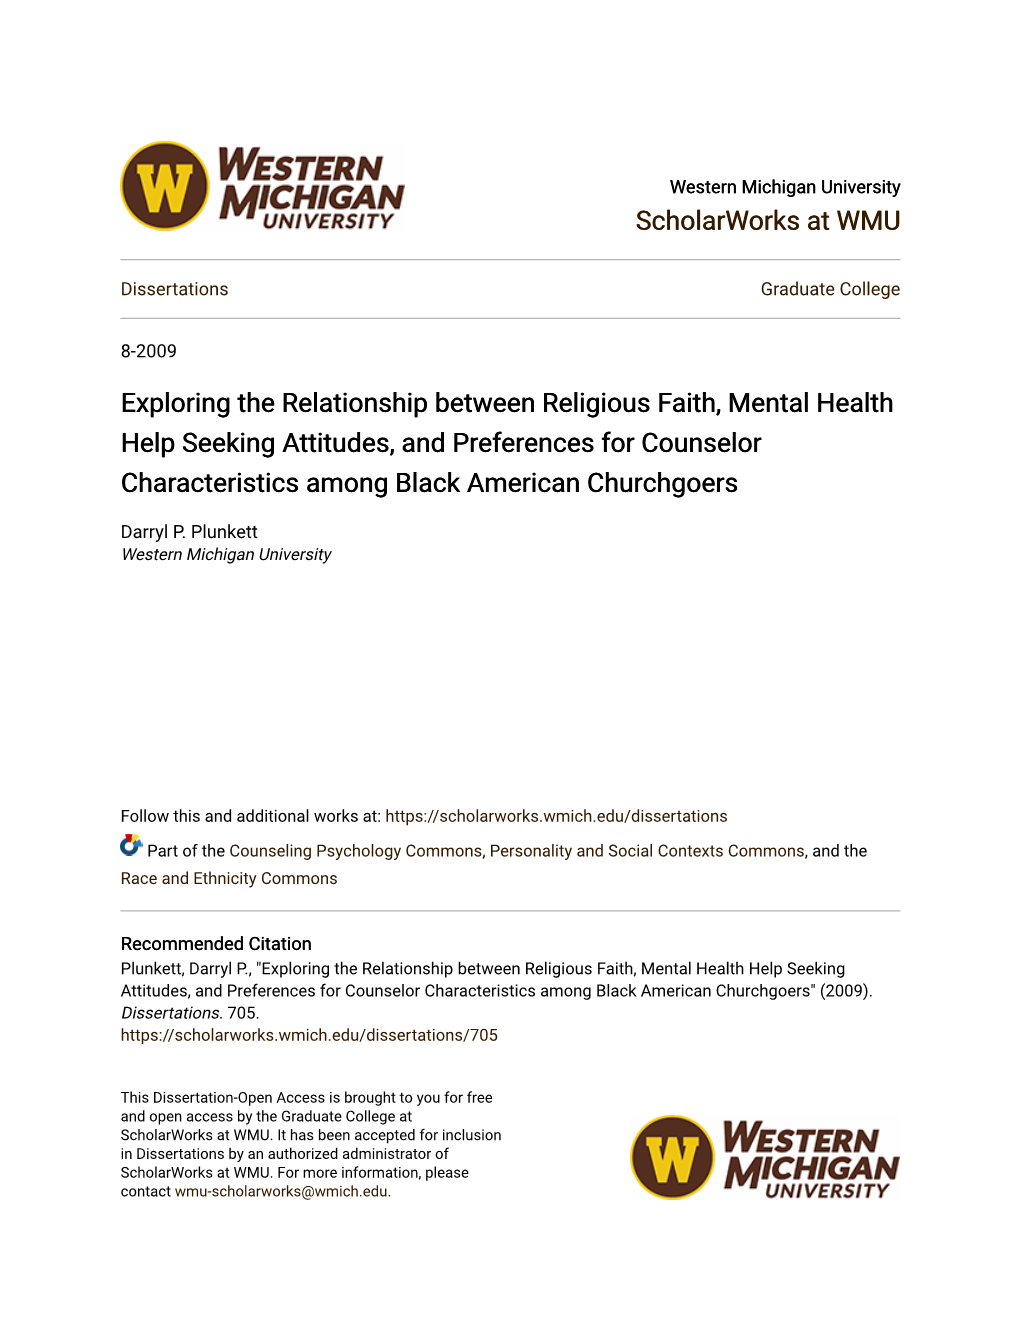 Exploring the Relationship Between Religious Faith, Mental Health Help